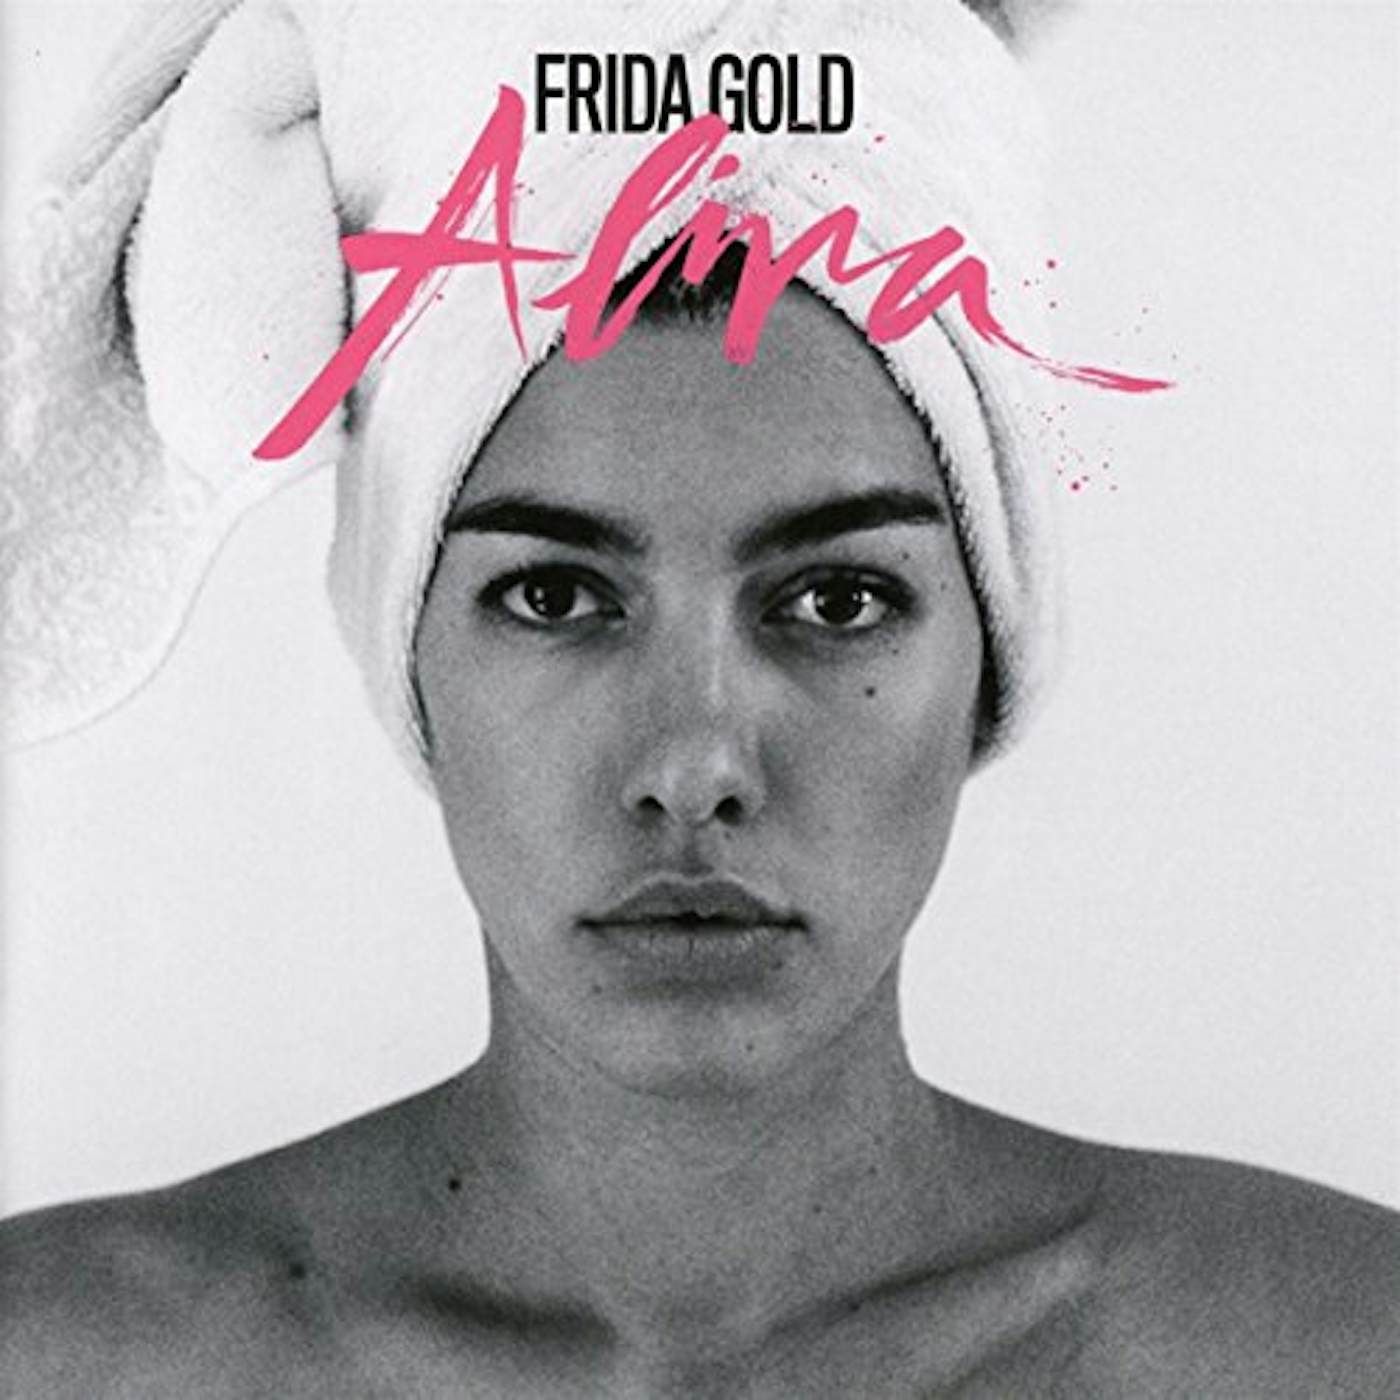 Frida Gold ALINA CD